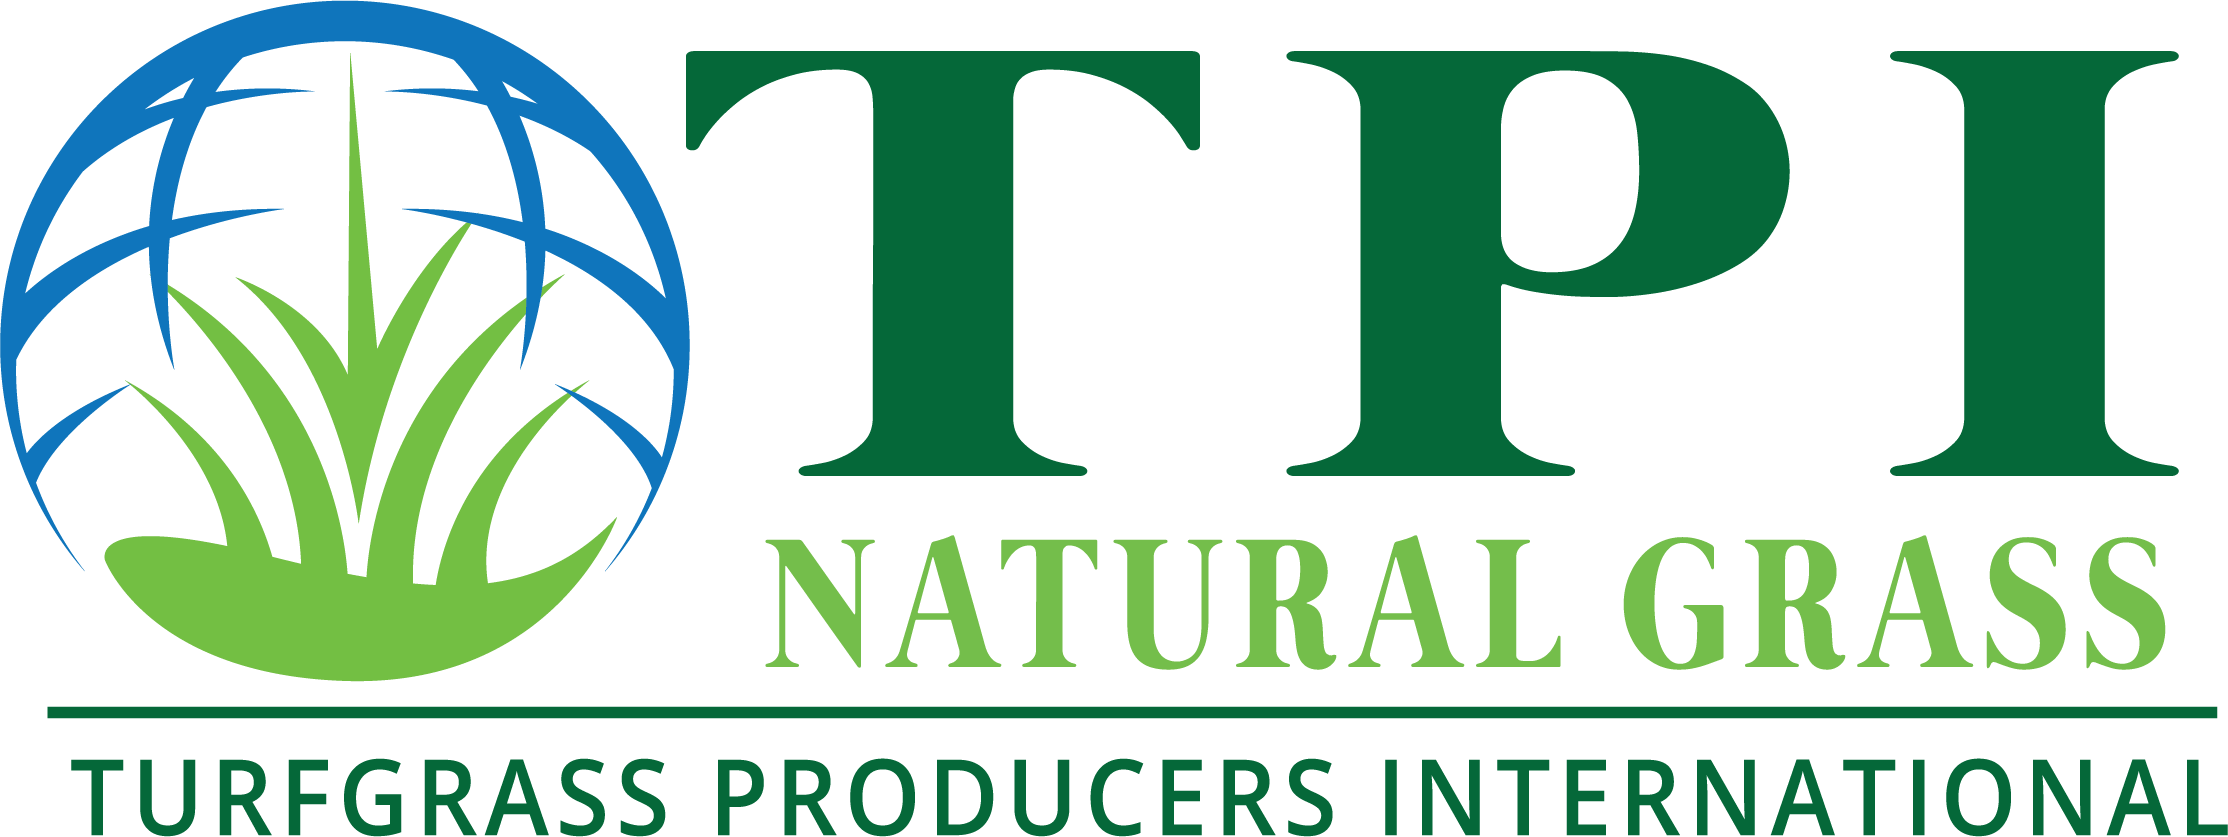 Turfgrass Producers International logo